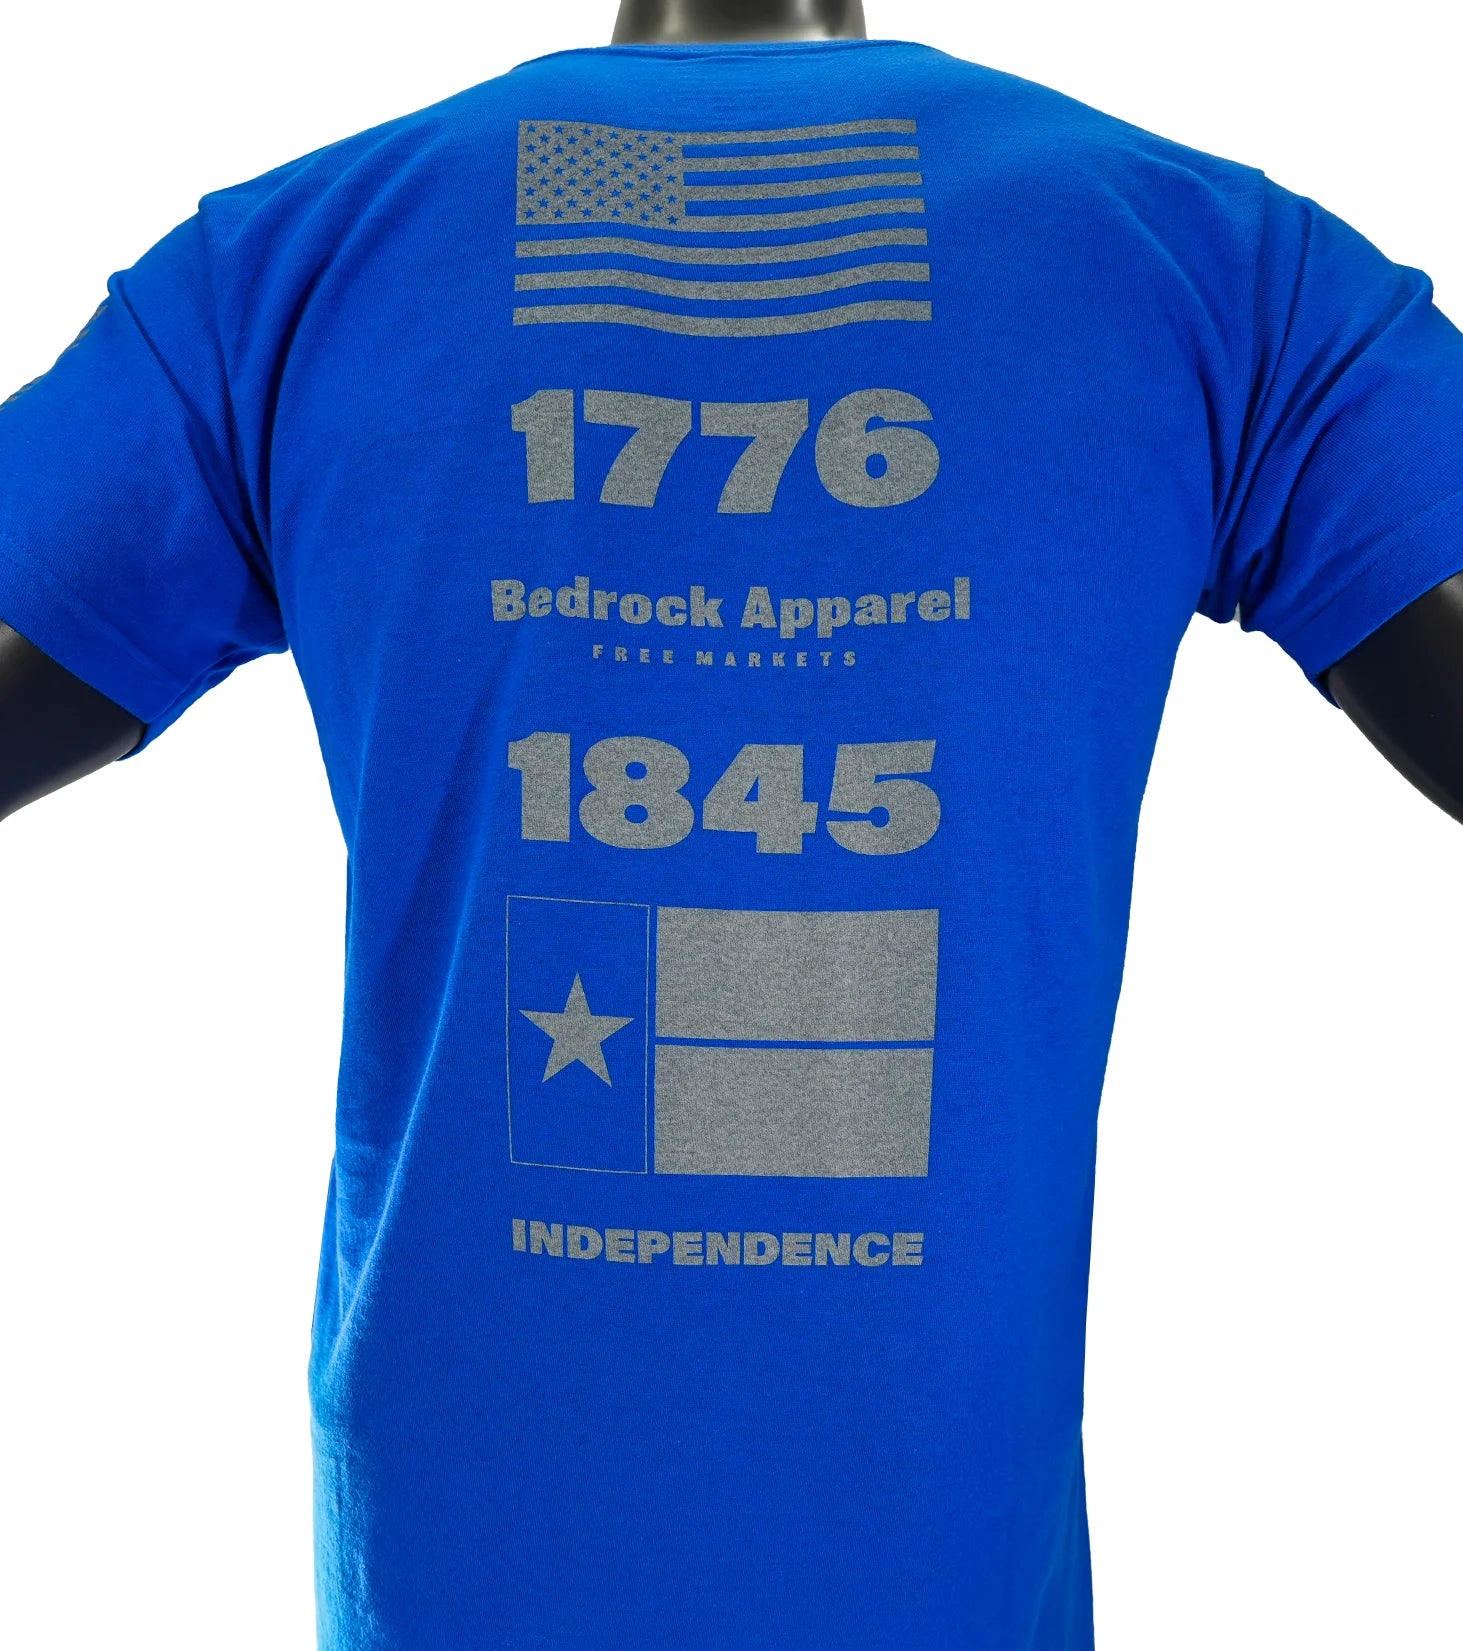 Free-Markets-1776-1845-t-shirt-back.webp